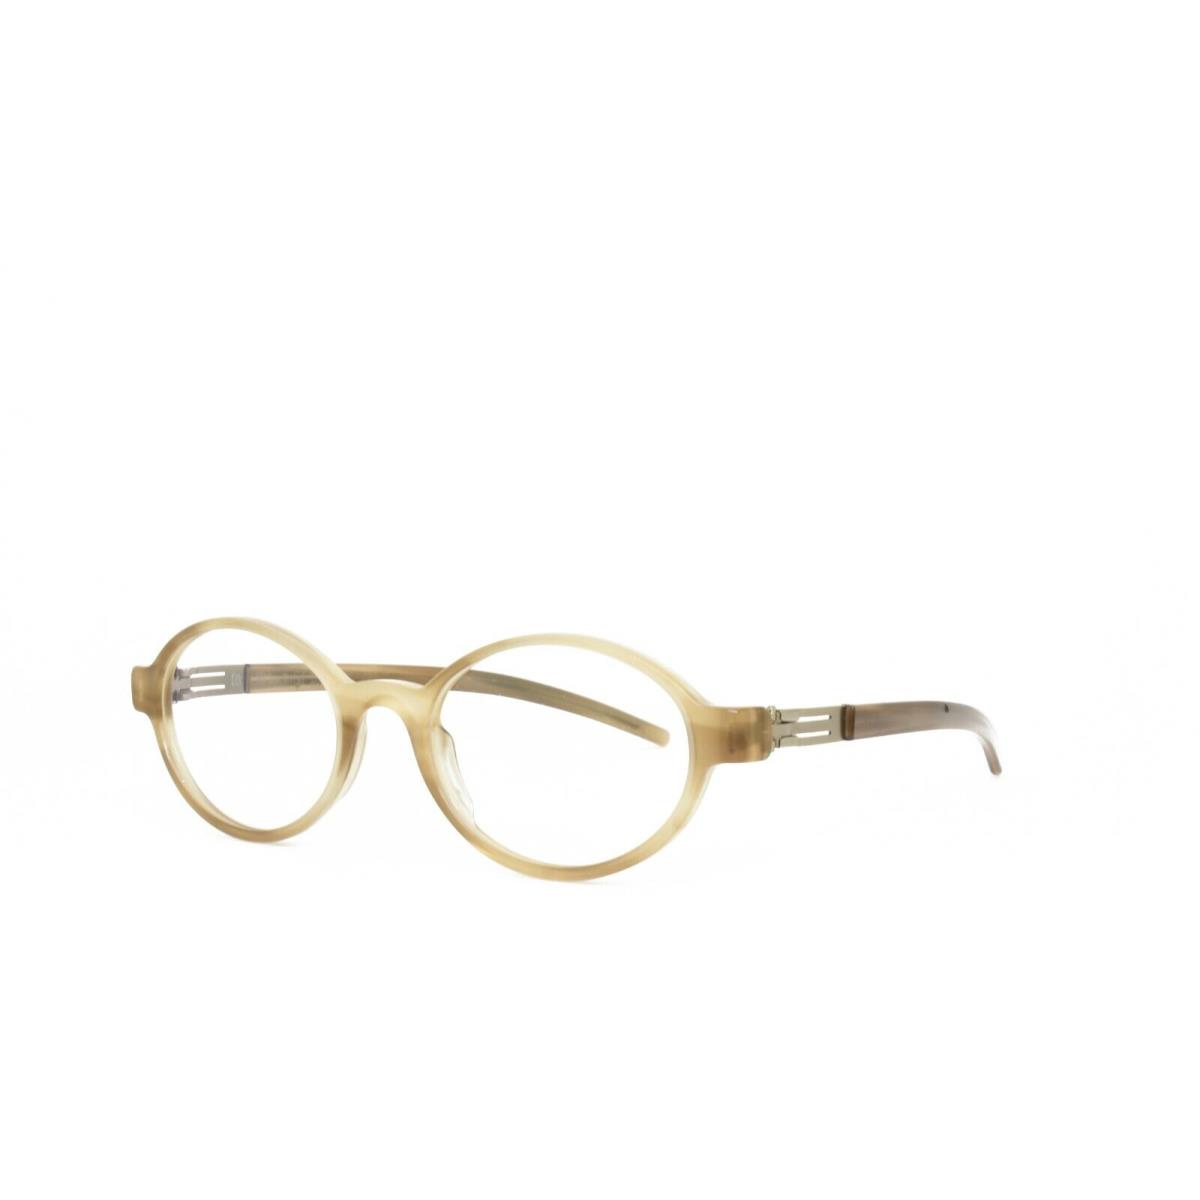 iC Berlin Eyeglasses Franziska Von S.-a. Bronze Caramel 48-20-145